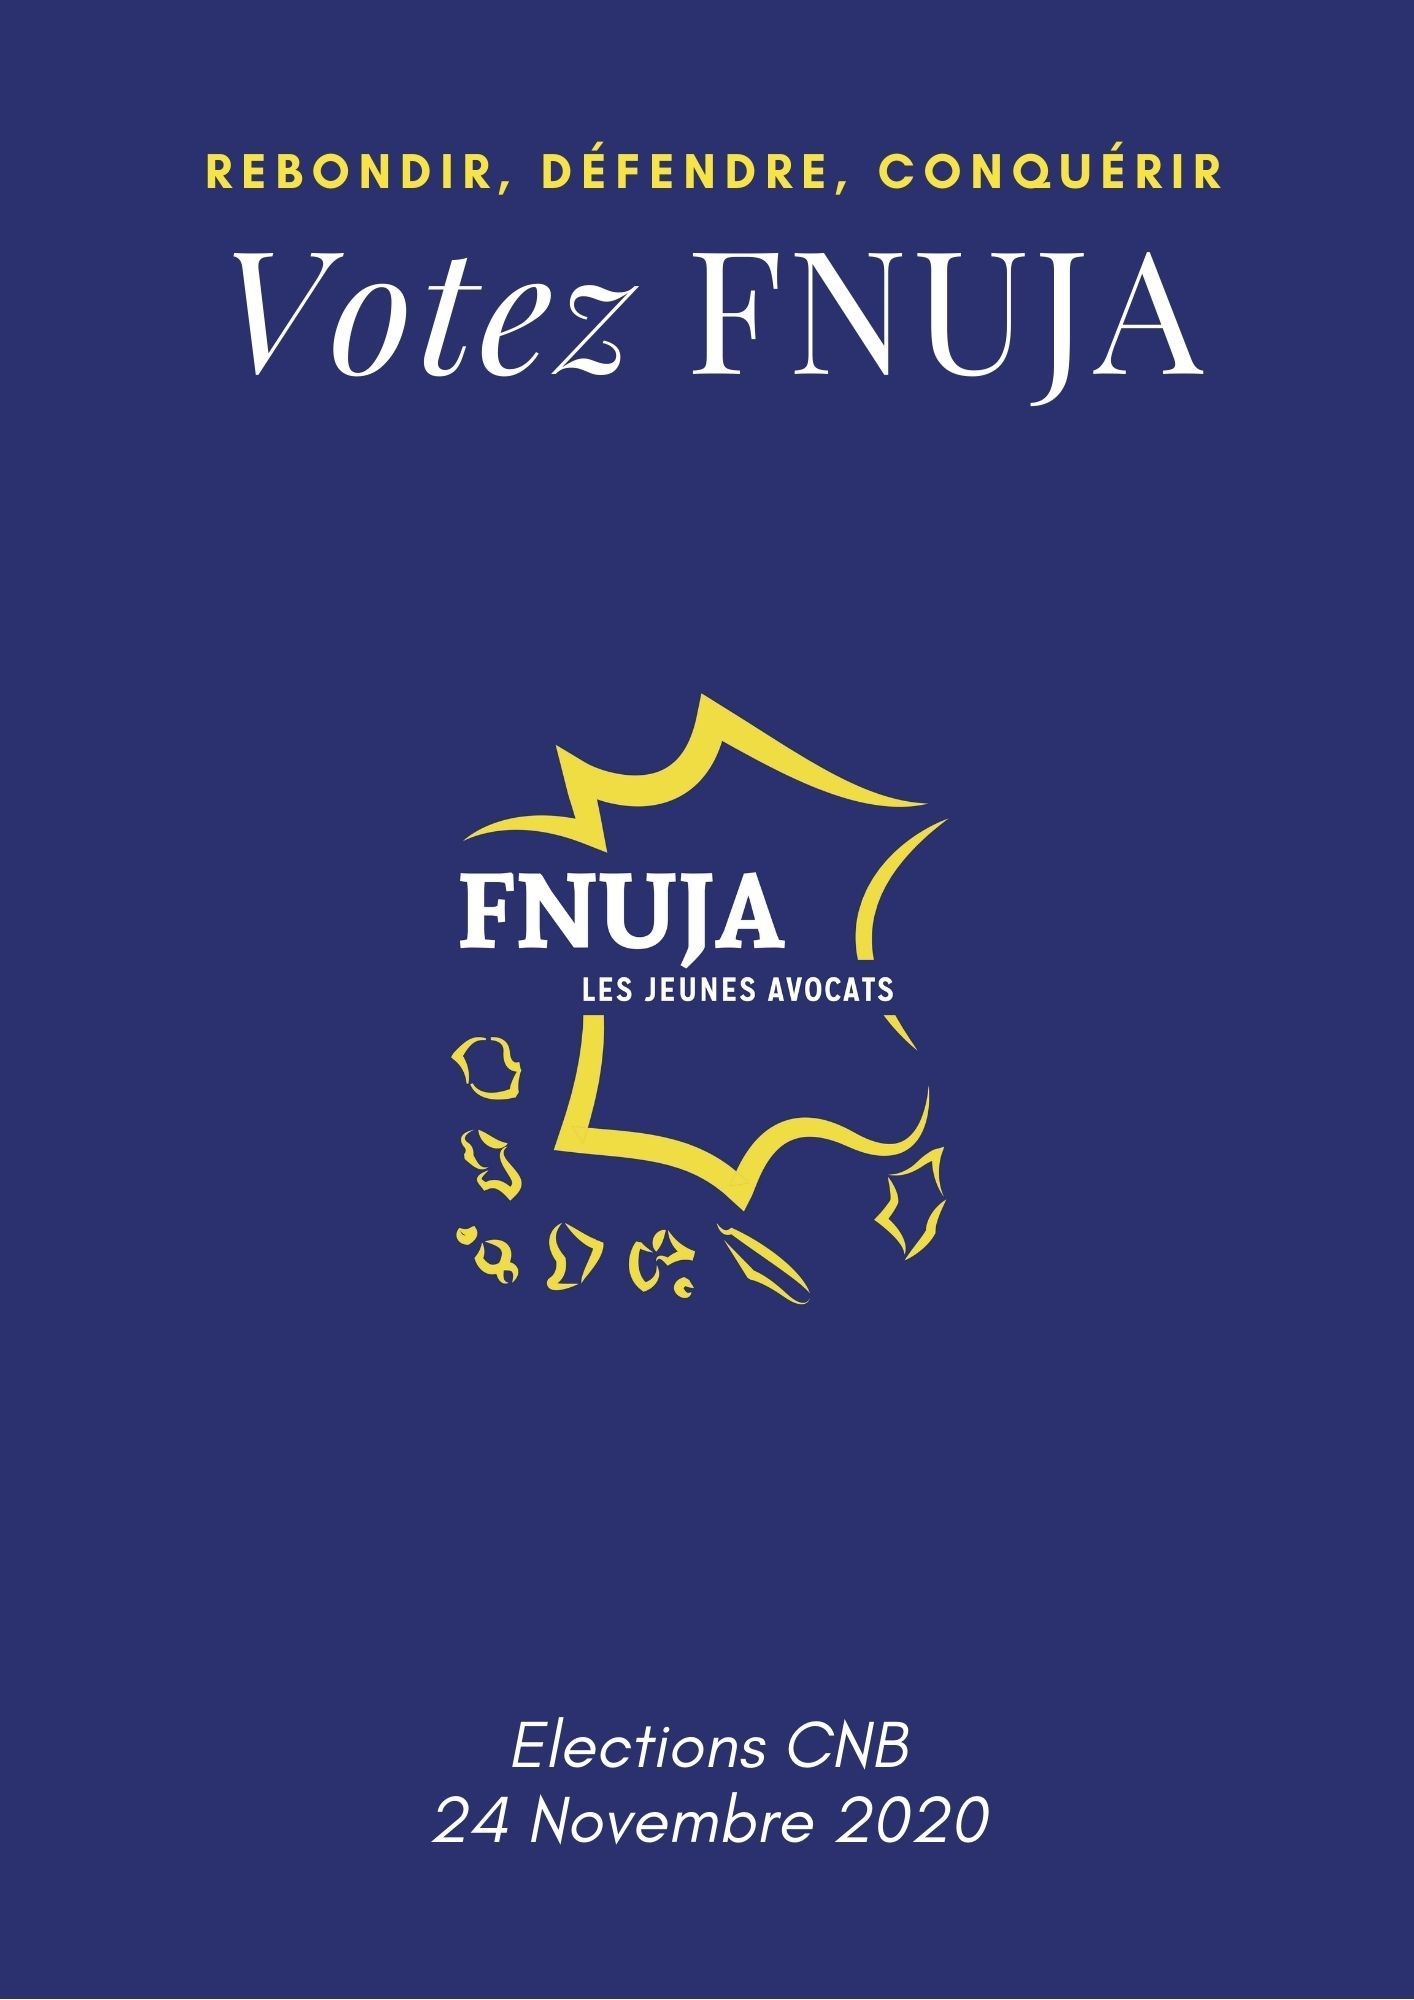 Elections CNB : Profession de foi de la FNUJA